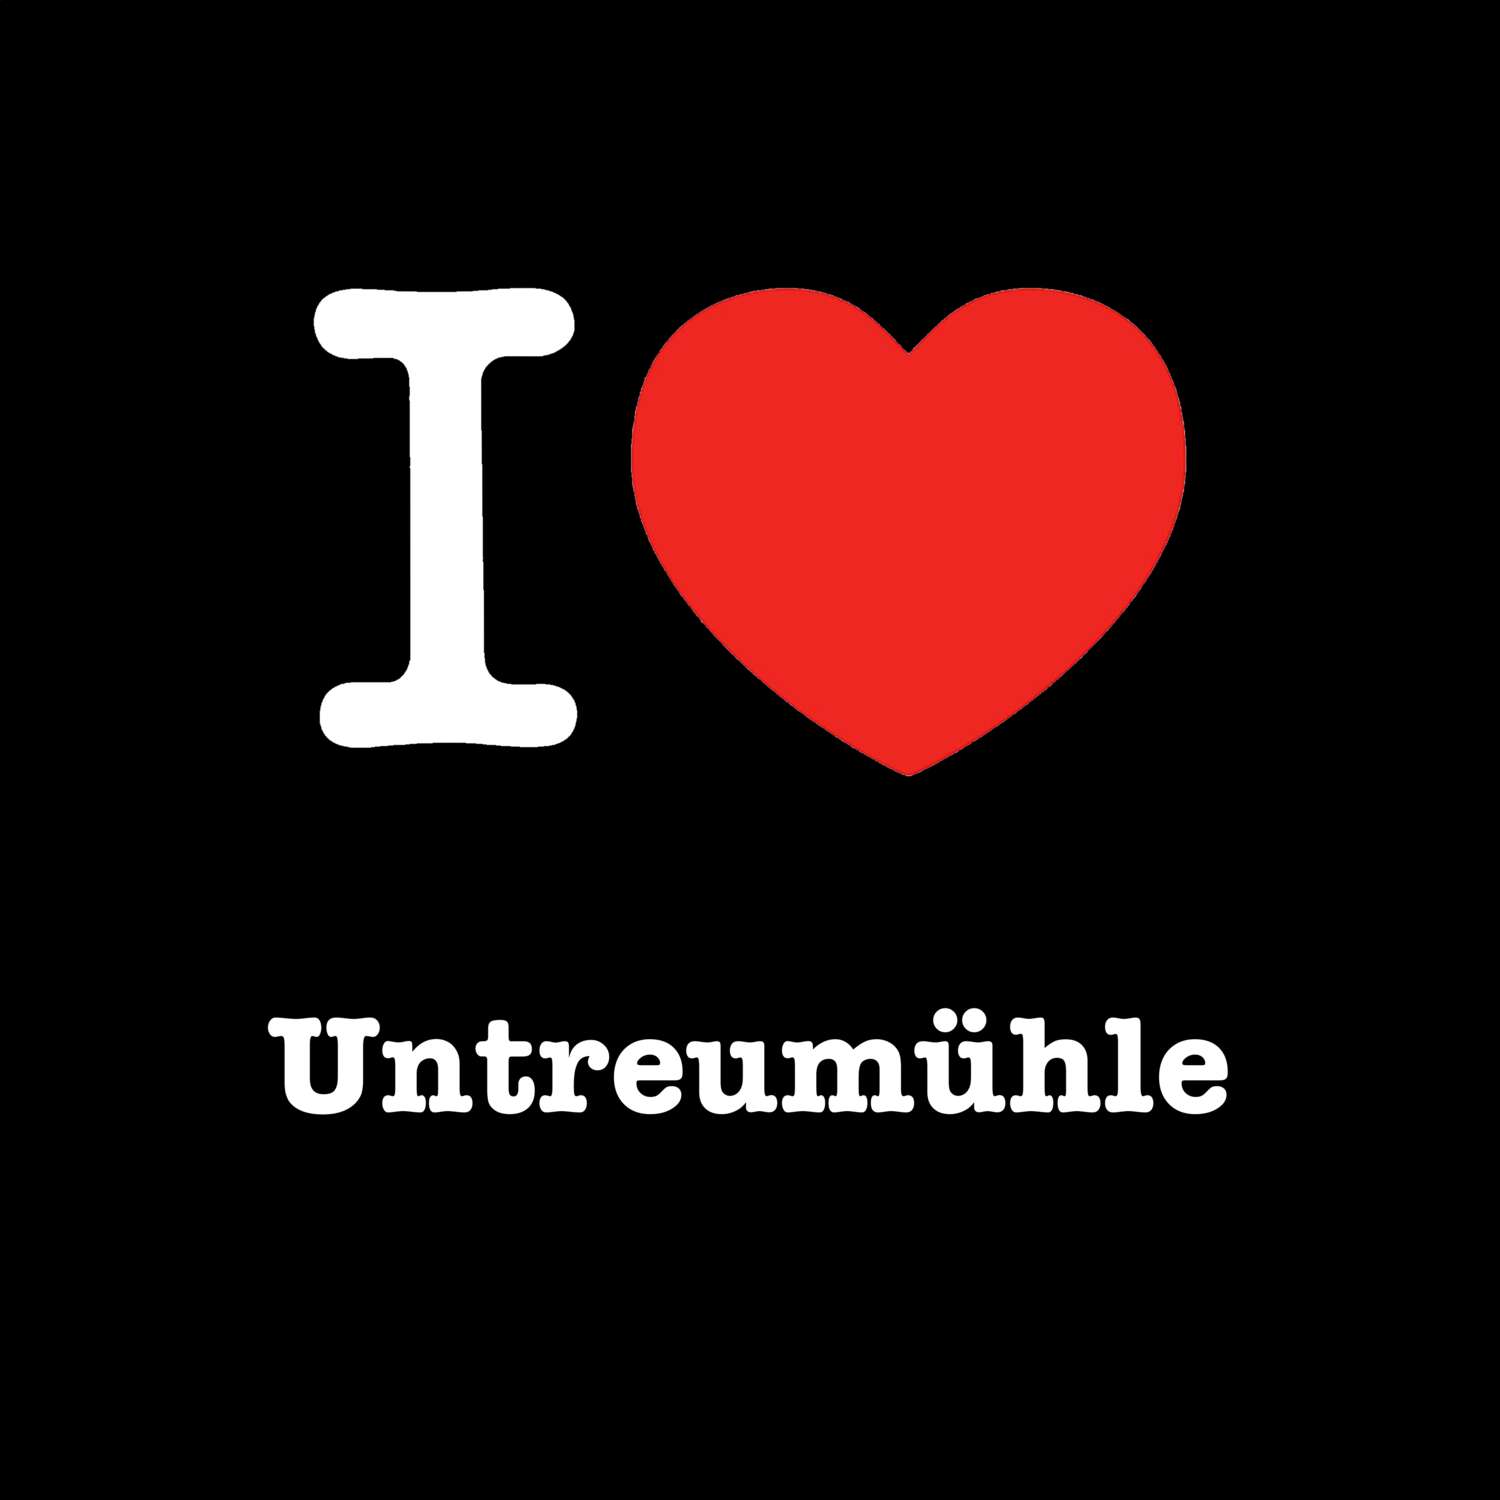 Untreumühle T-Shirt »I love«